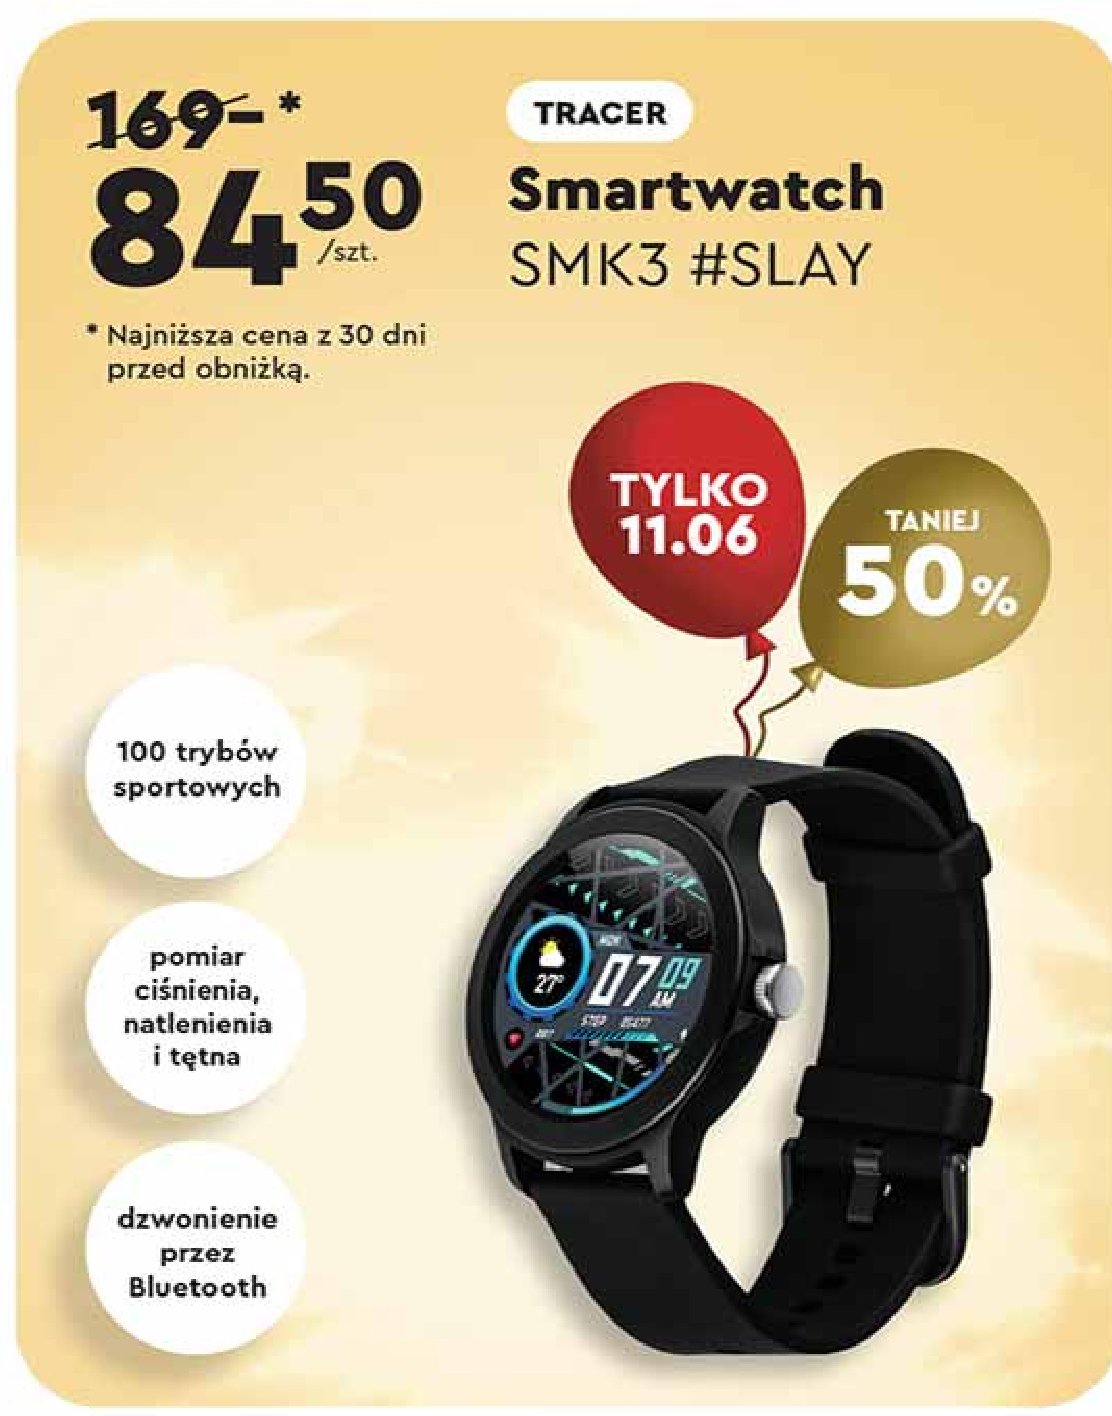 Smartwatch smk3 #slay Tracer promocja